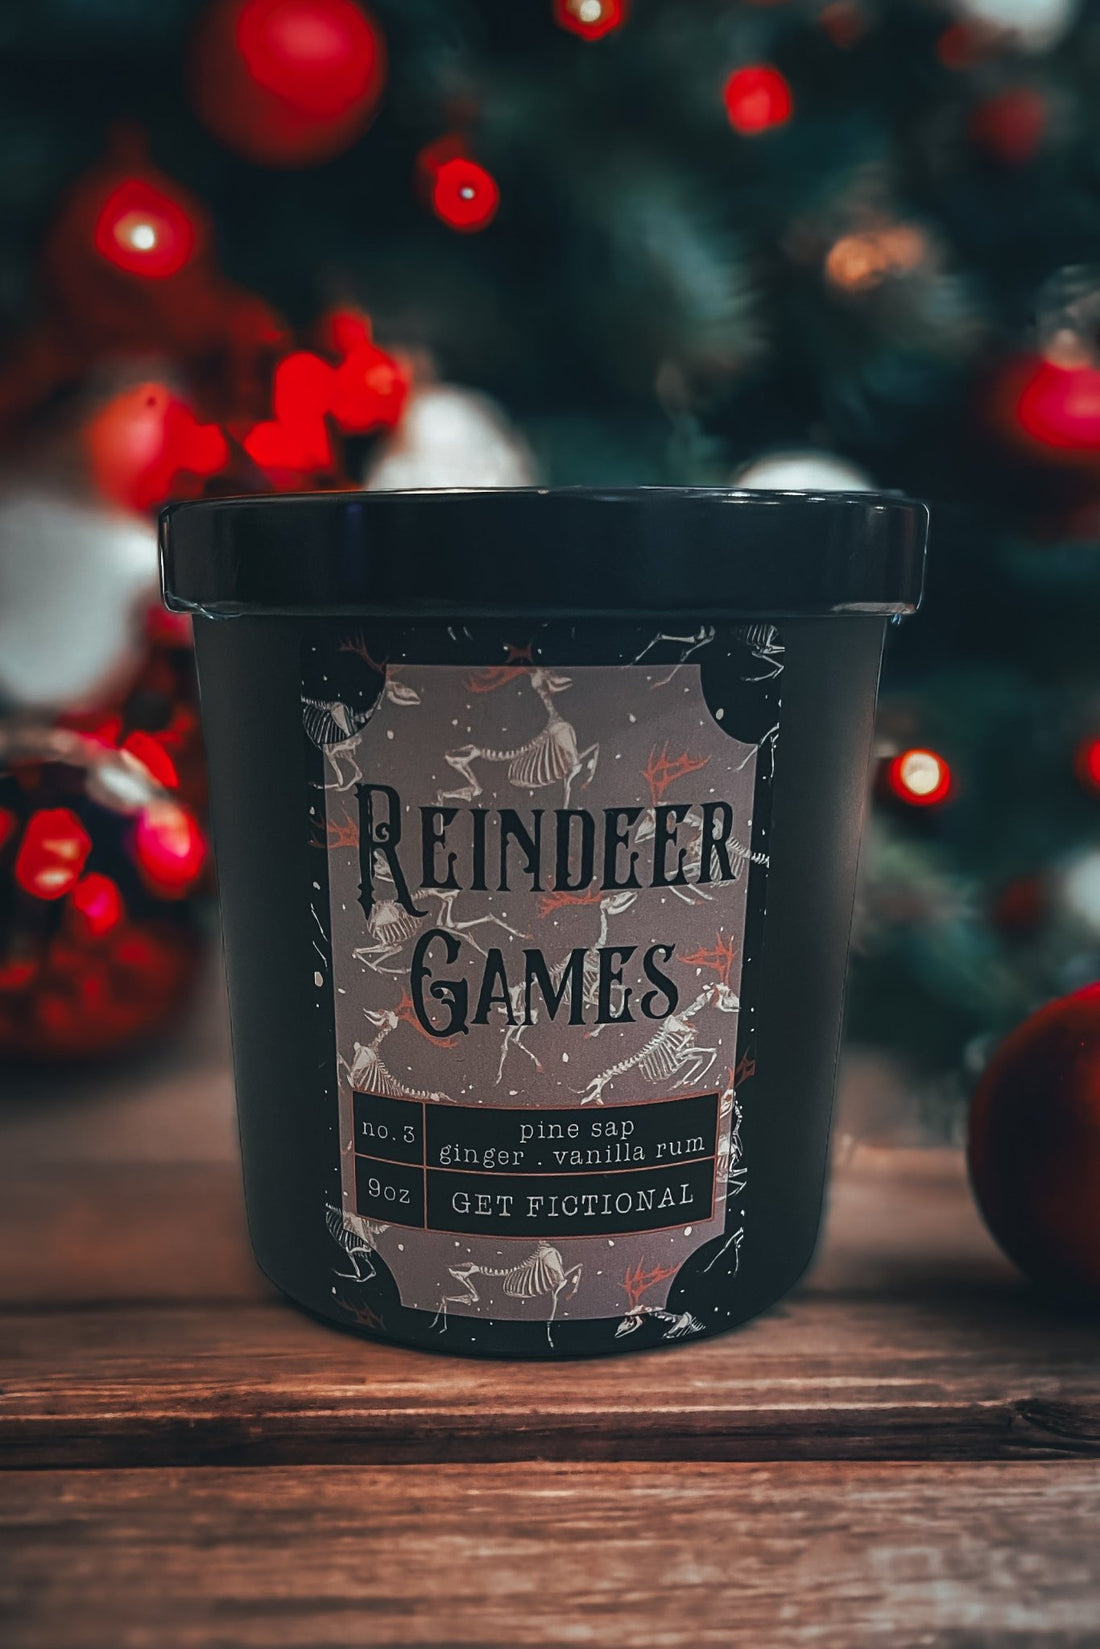 Reindeer Games - Get Fictional